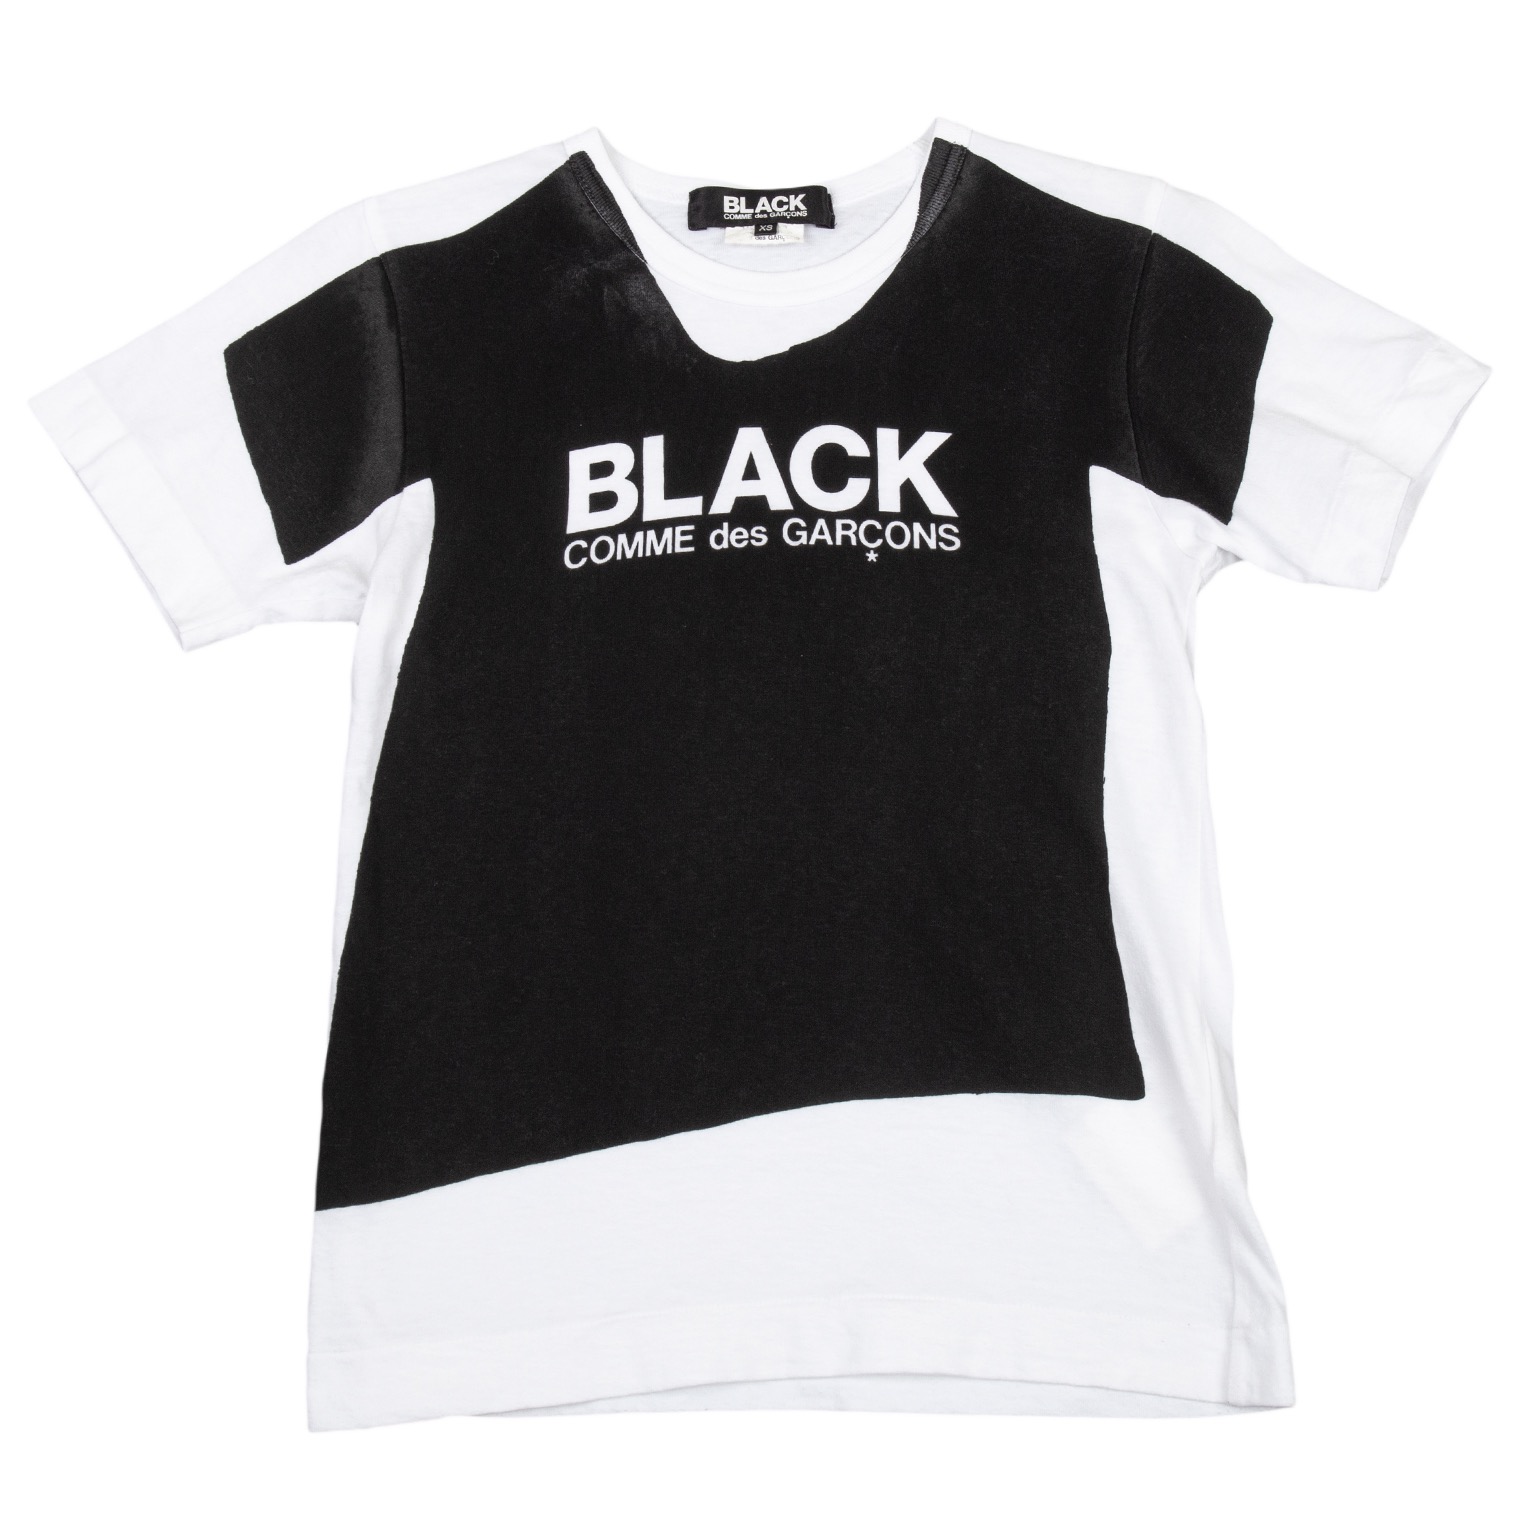 COMME des GARCONS SHIRT フロントロゴTシャツ 黒 未使用